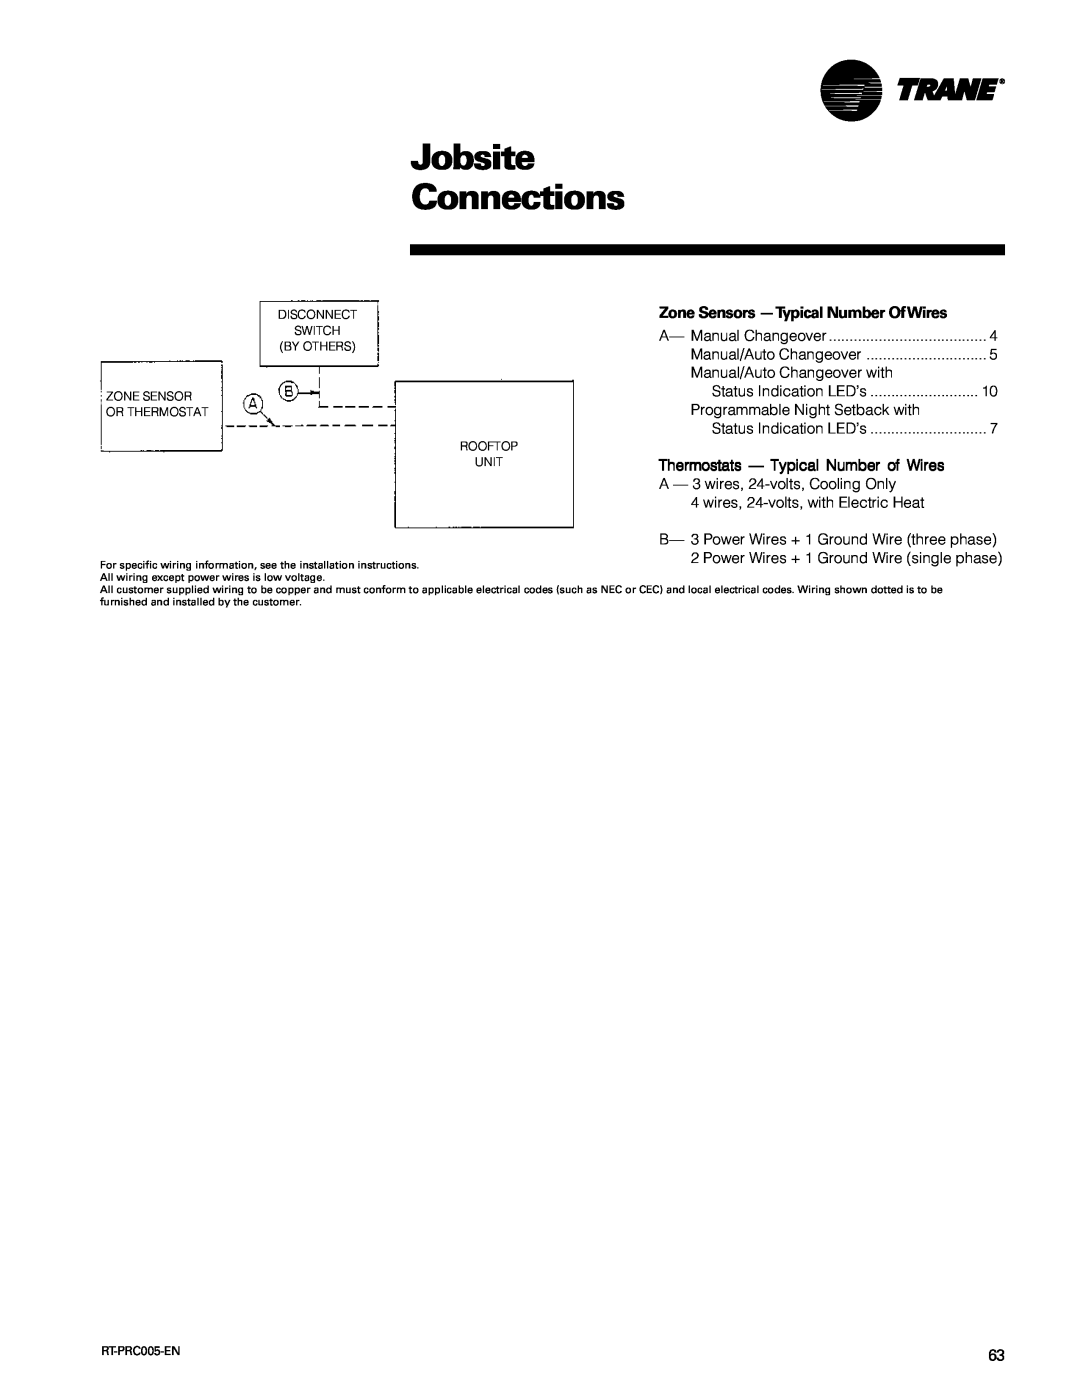 Trane RT-PRC005 manual Jobsite Connections 